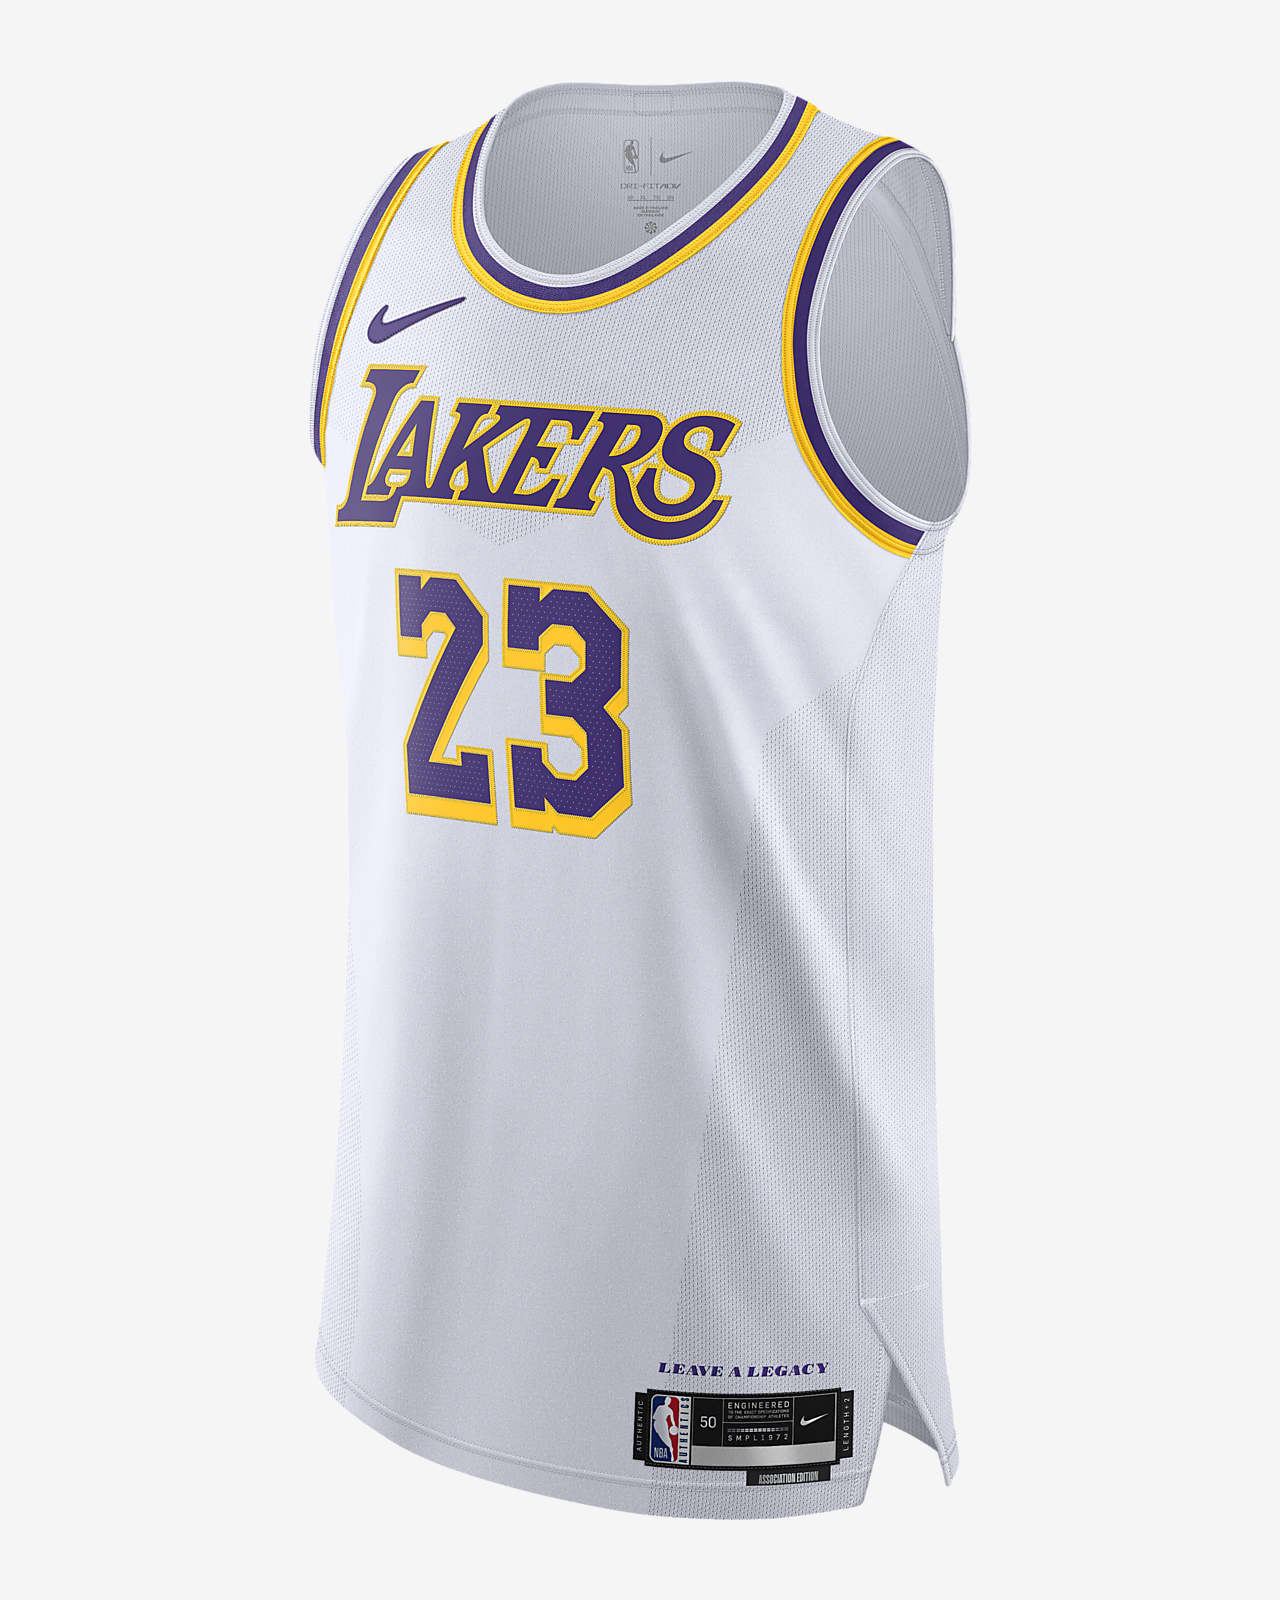 2022/23 赛季洛杉矶湖人队 Association Edition Nike Dri-FIT ADV NBA Authentic Jersey 男子速干球衣